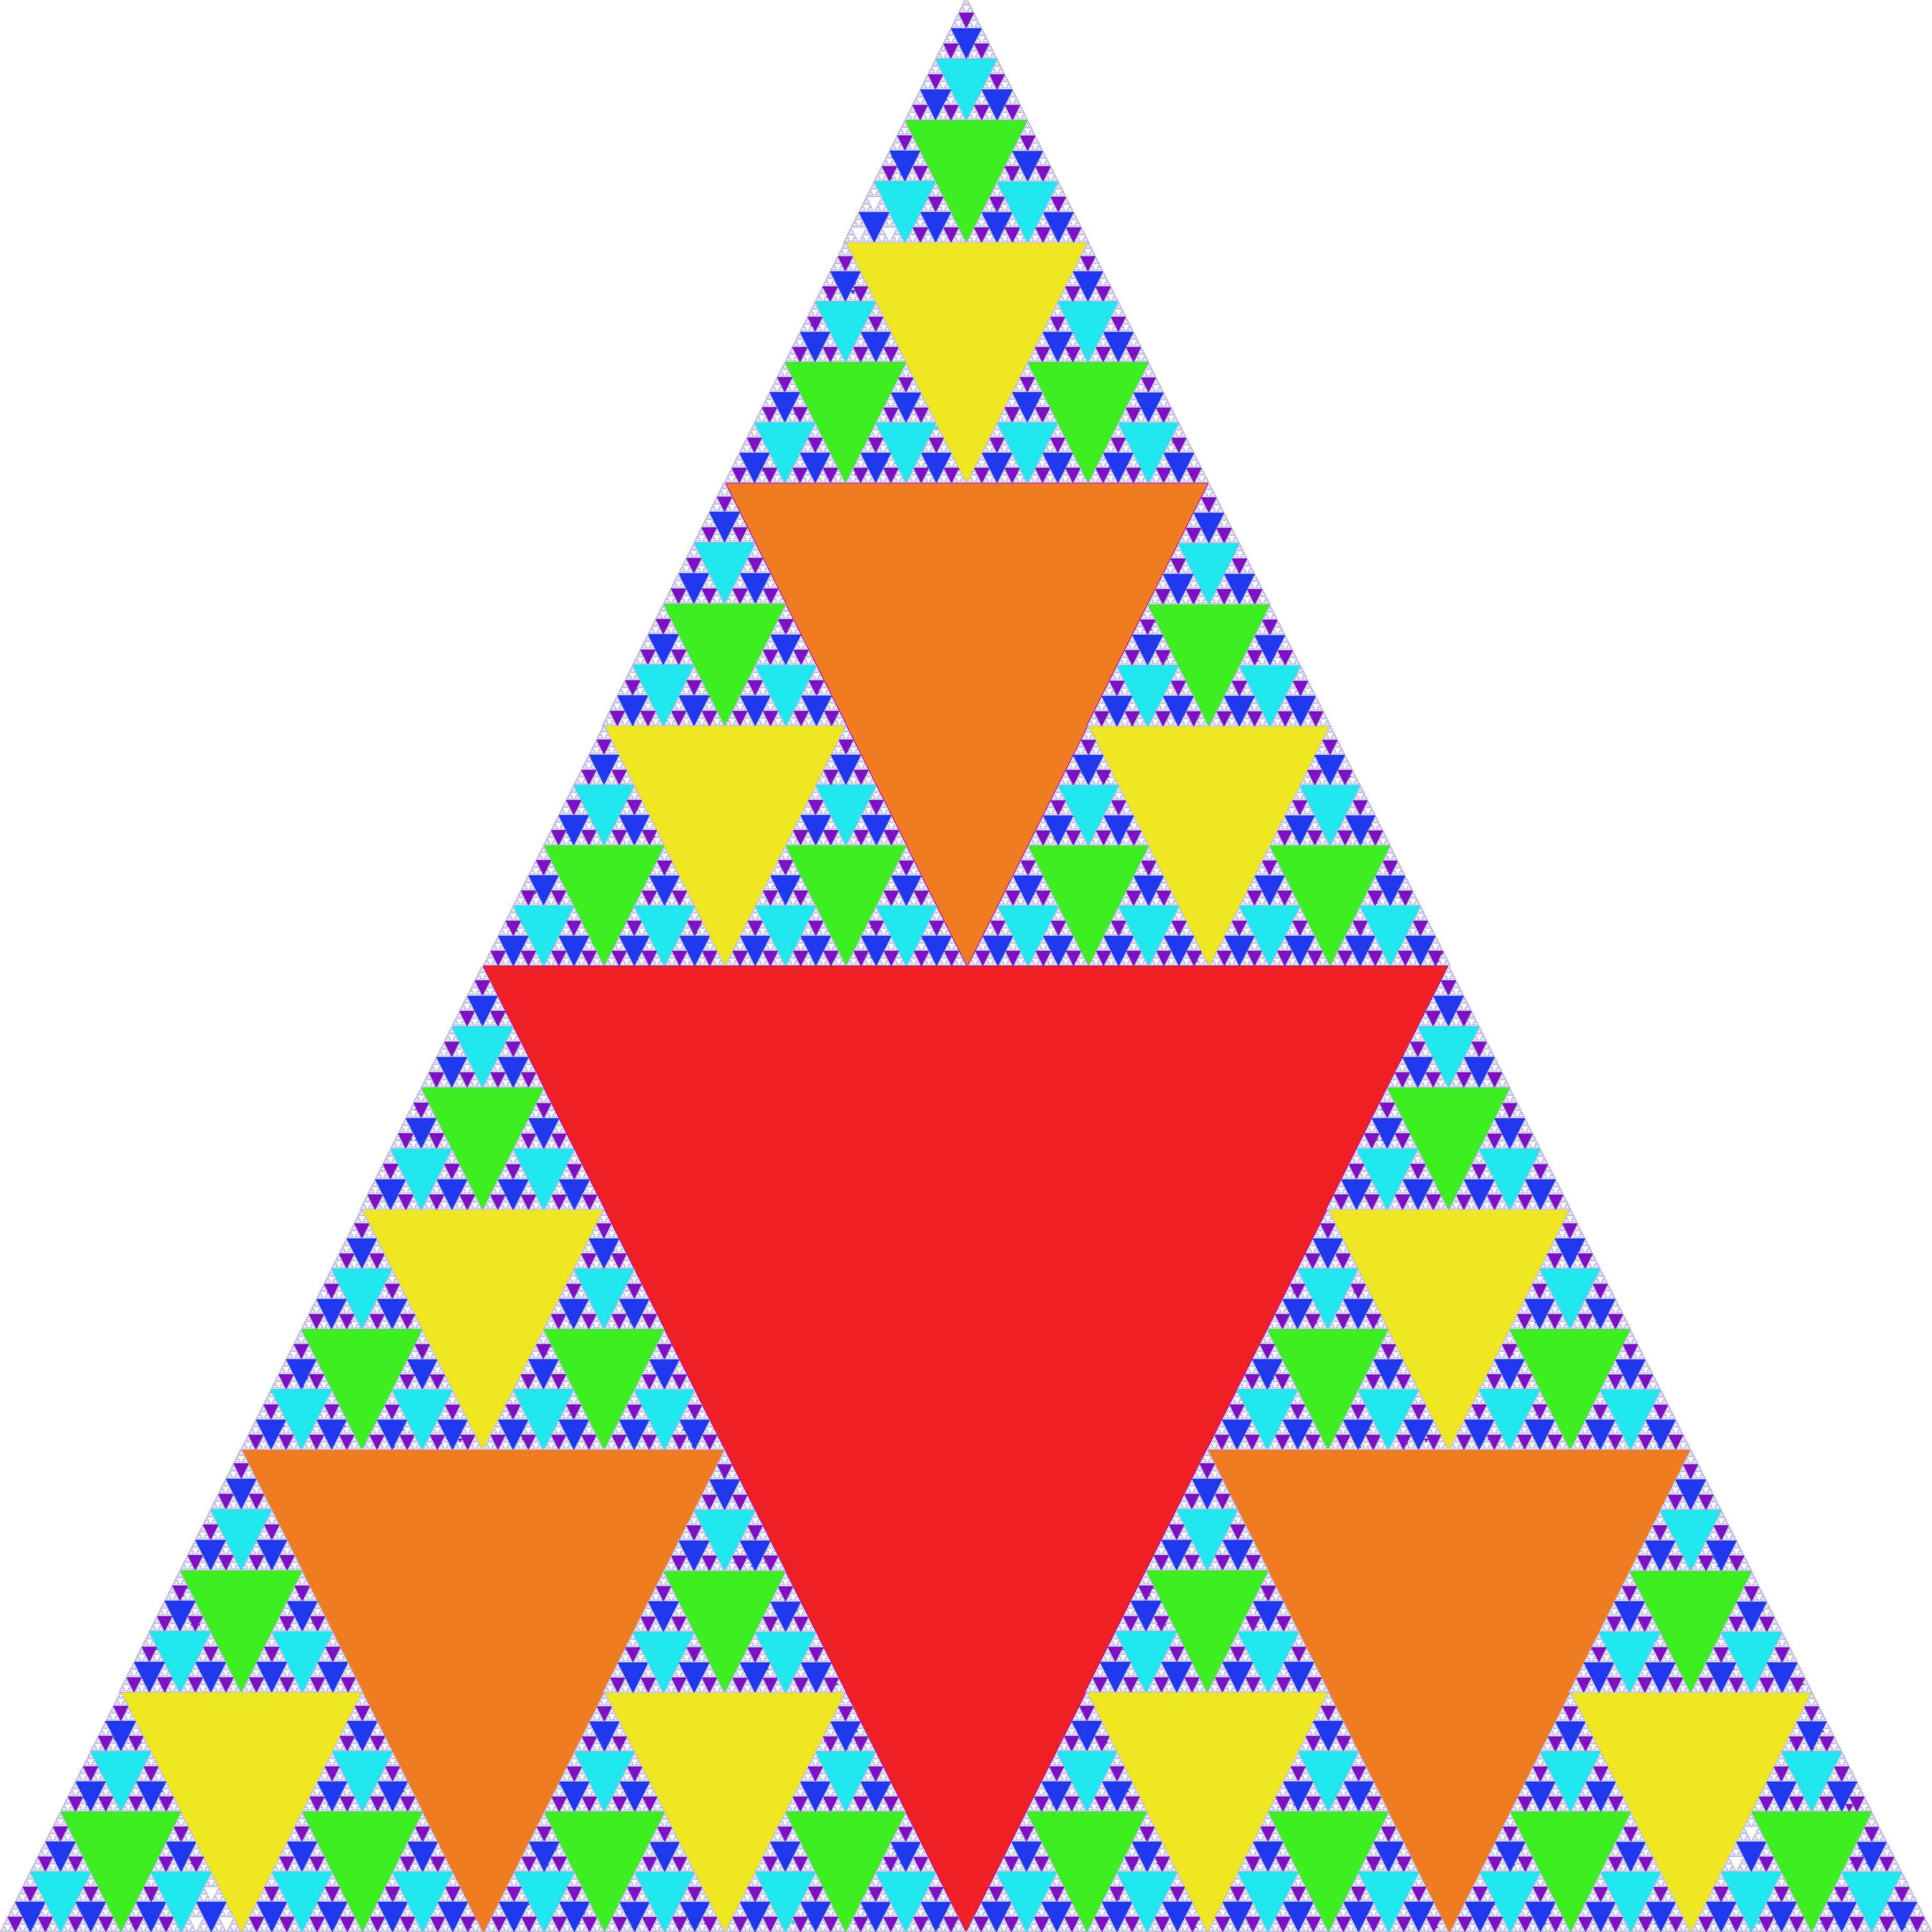 Orange Upside Down Triangle Logo - Upside Down Triangles | Oser69's Blog